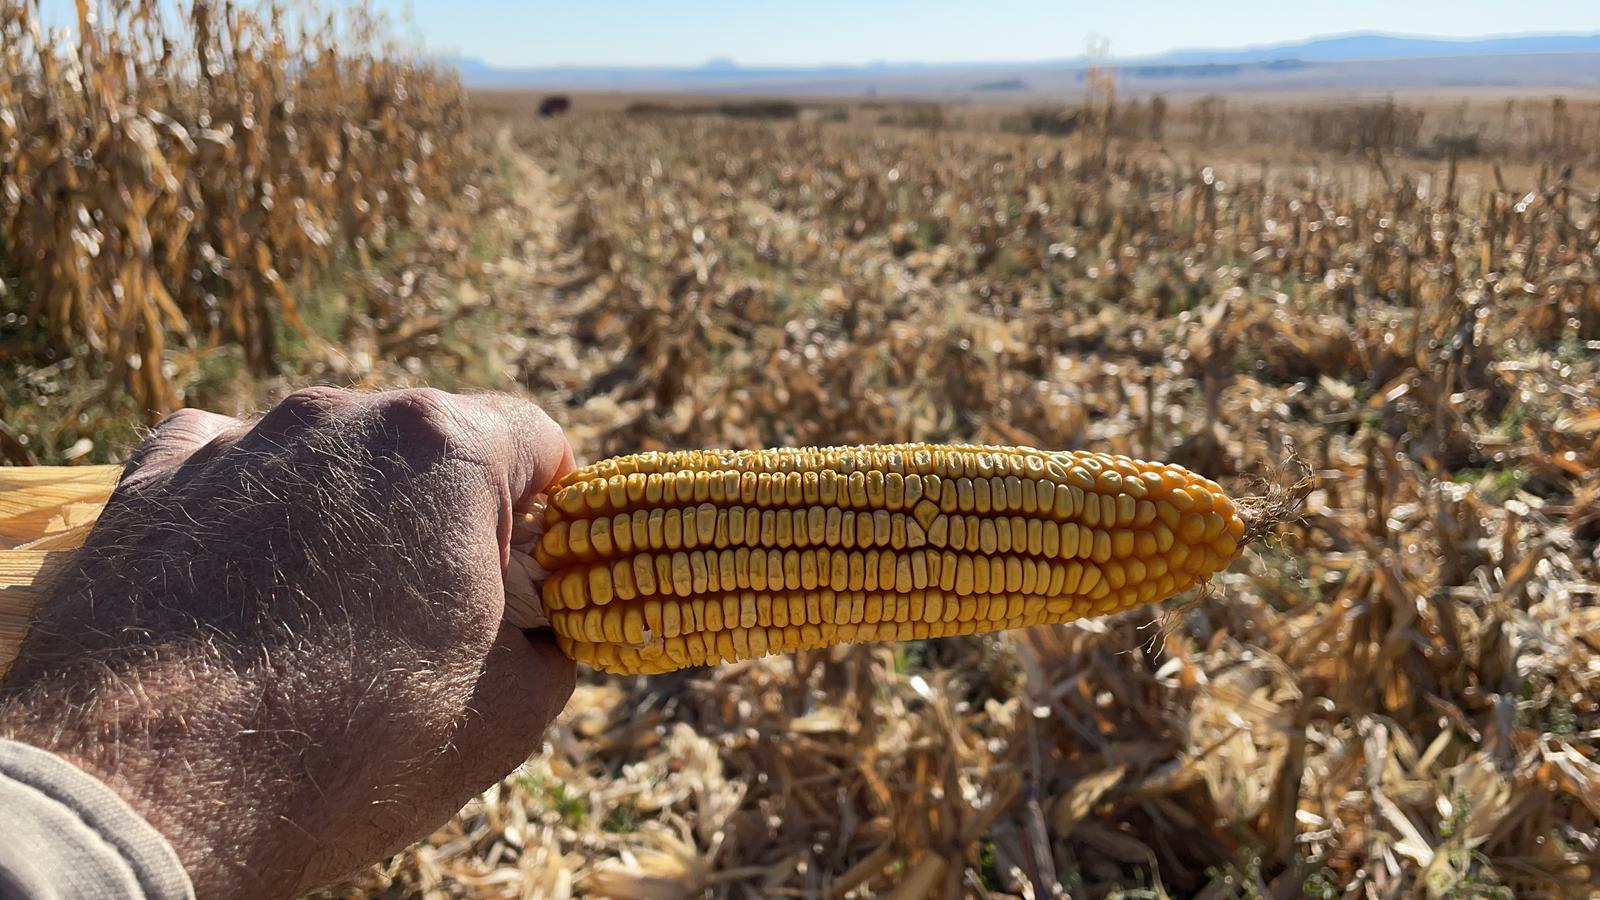 Theunis Pretorius farms corn